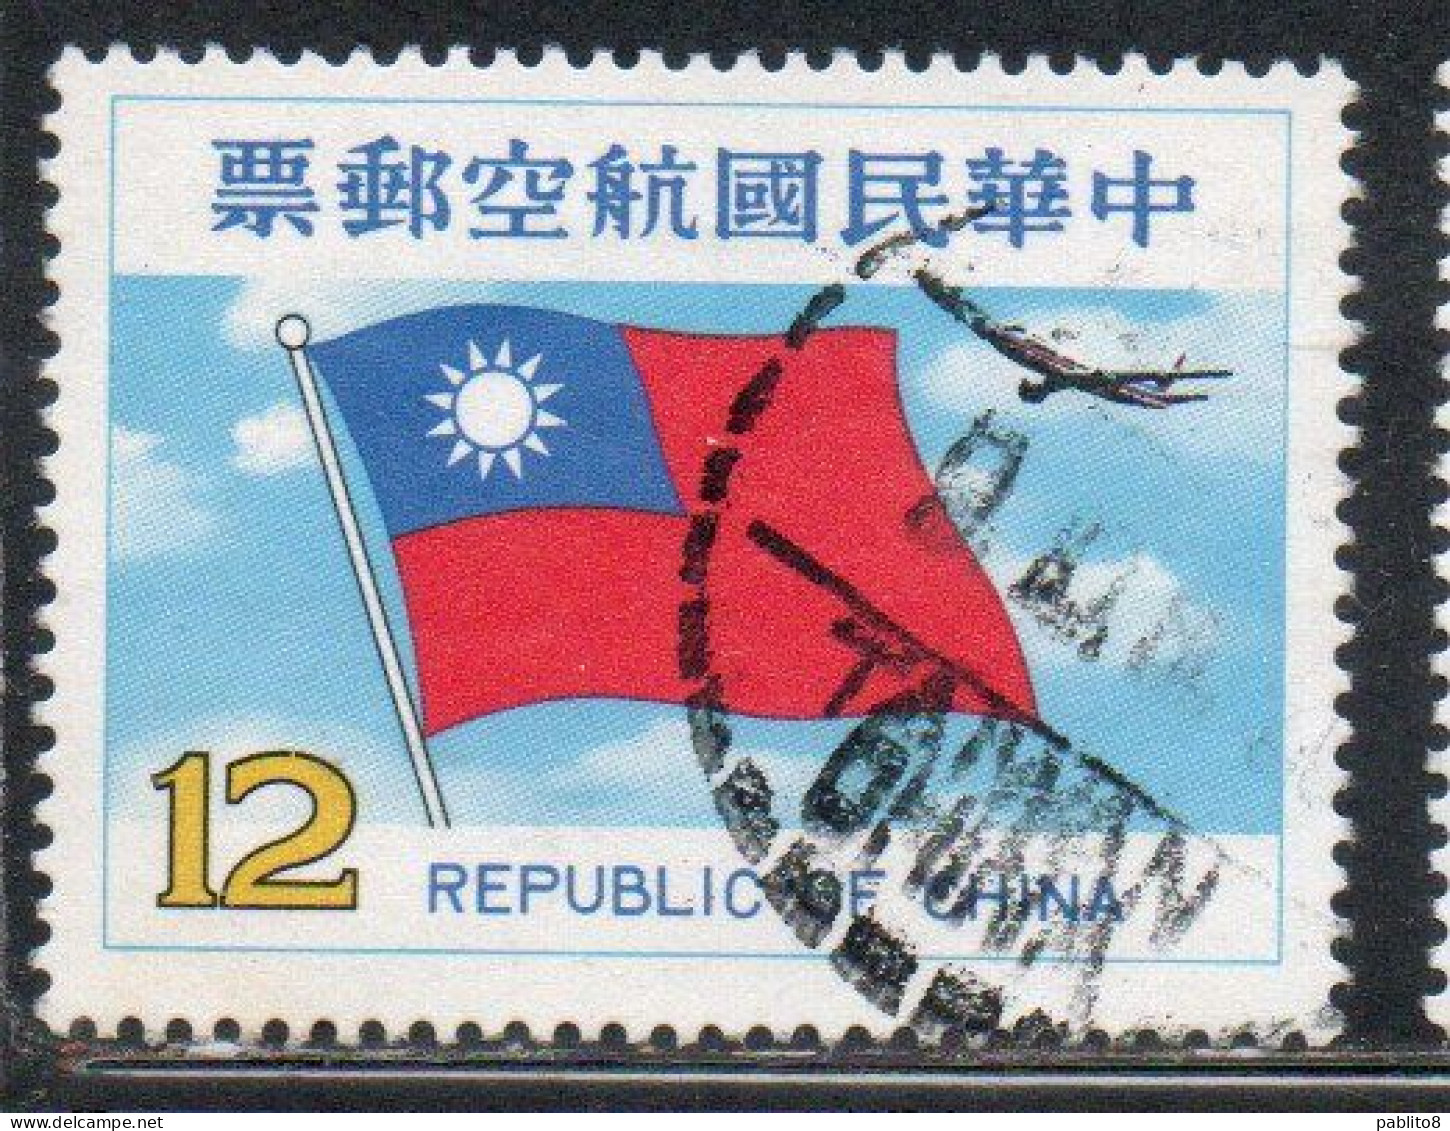 CHINA REPUBLIC CINA TAIWAN FORMOSA 1980 AIR POST MAIL AIRMAIL NATIONAL FLAG JET 12$ USED USATO OBLITERE' - Posta Aerea